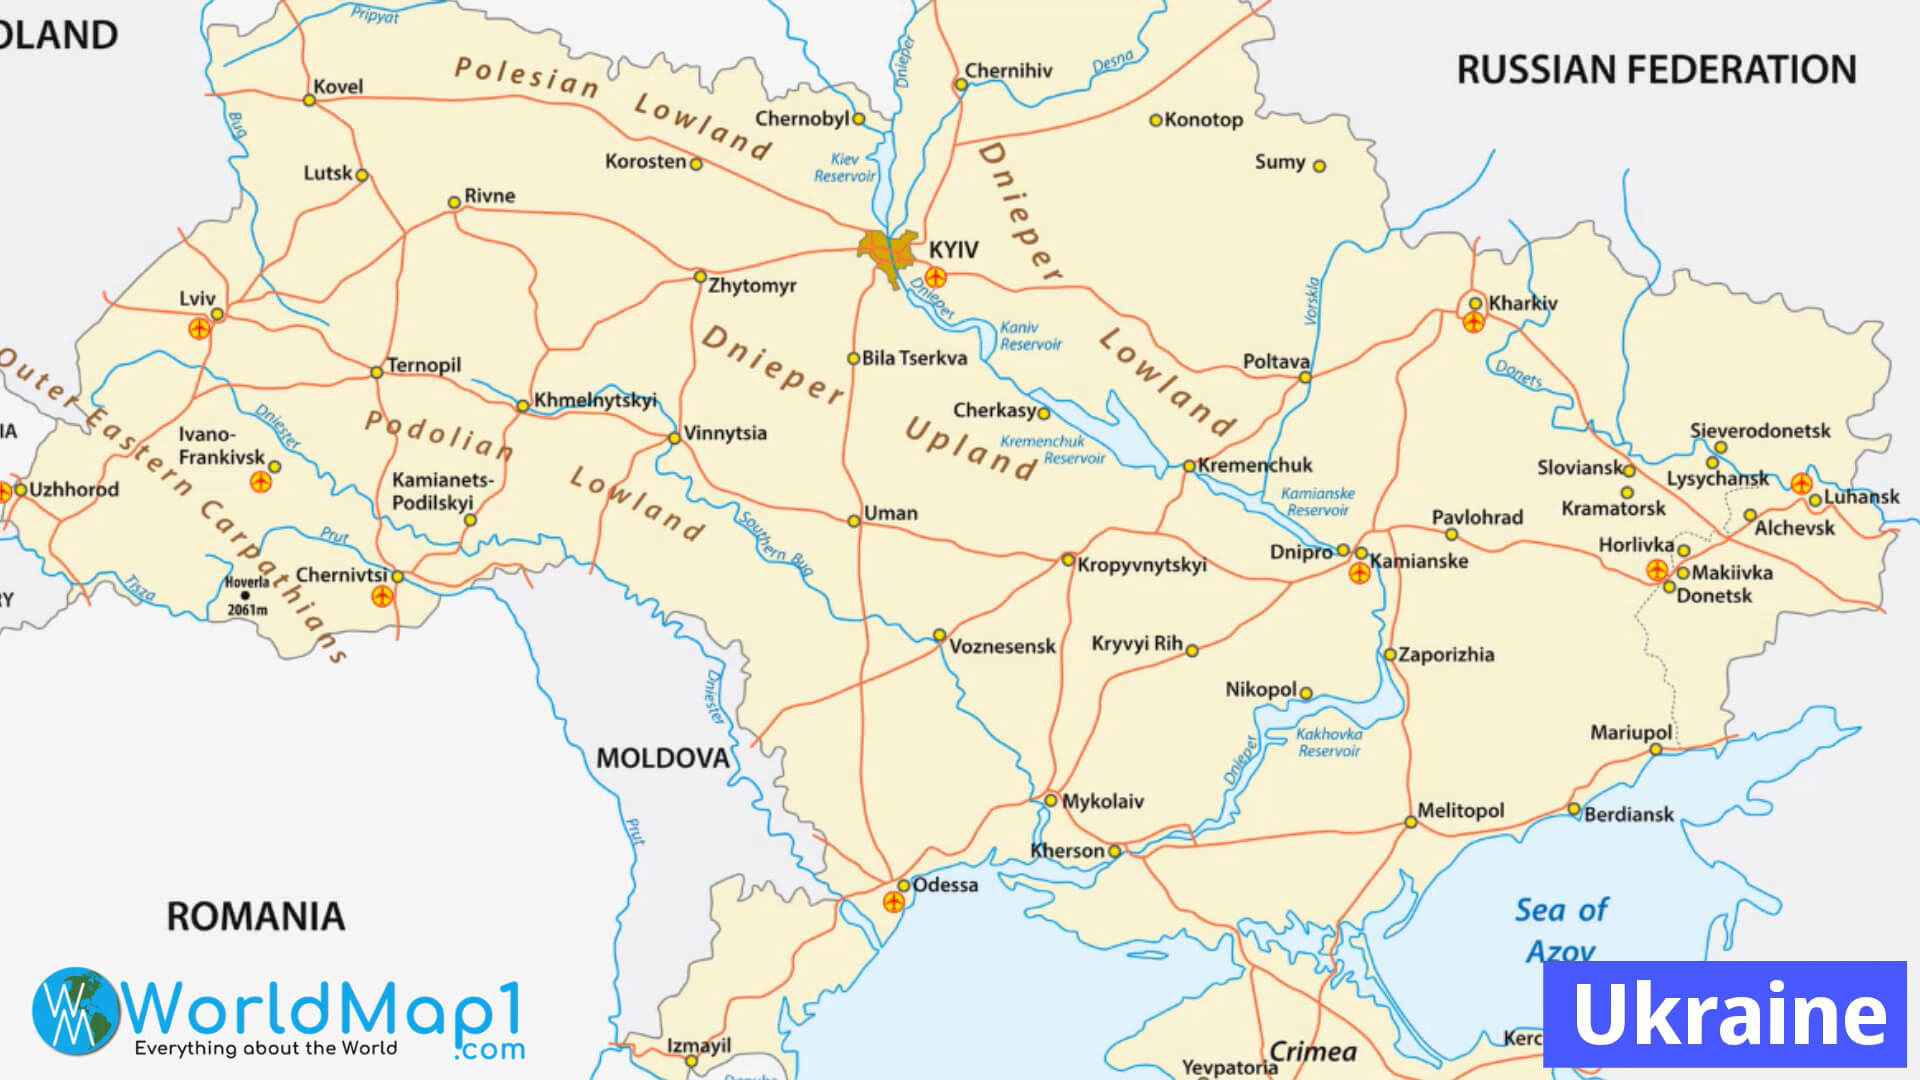 Ukraine Cities and Road Map